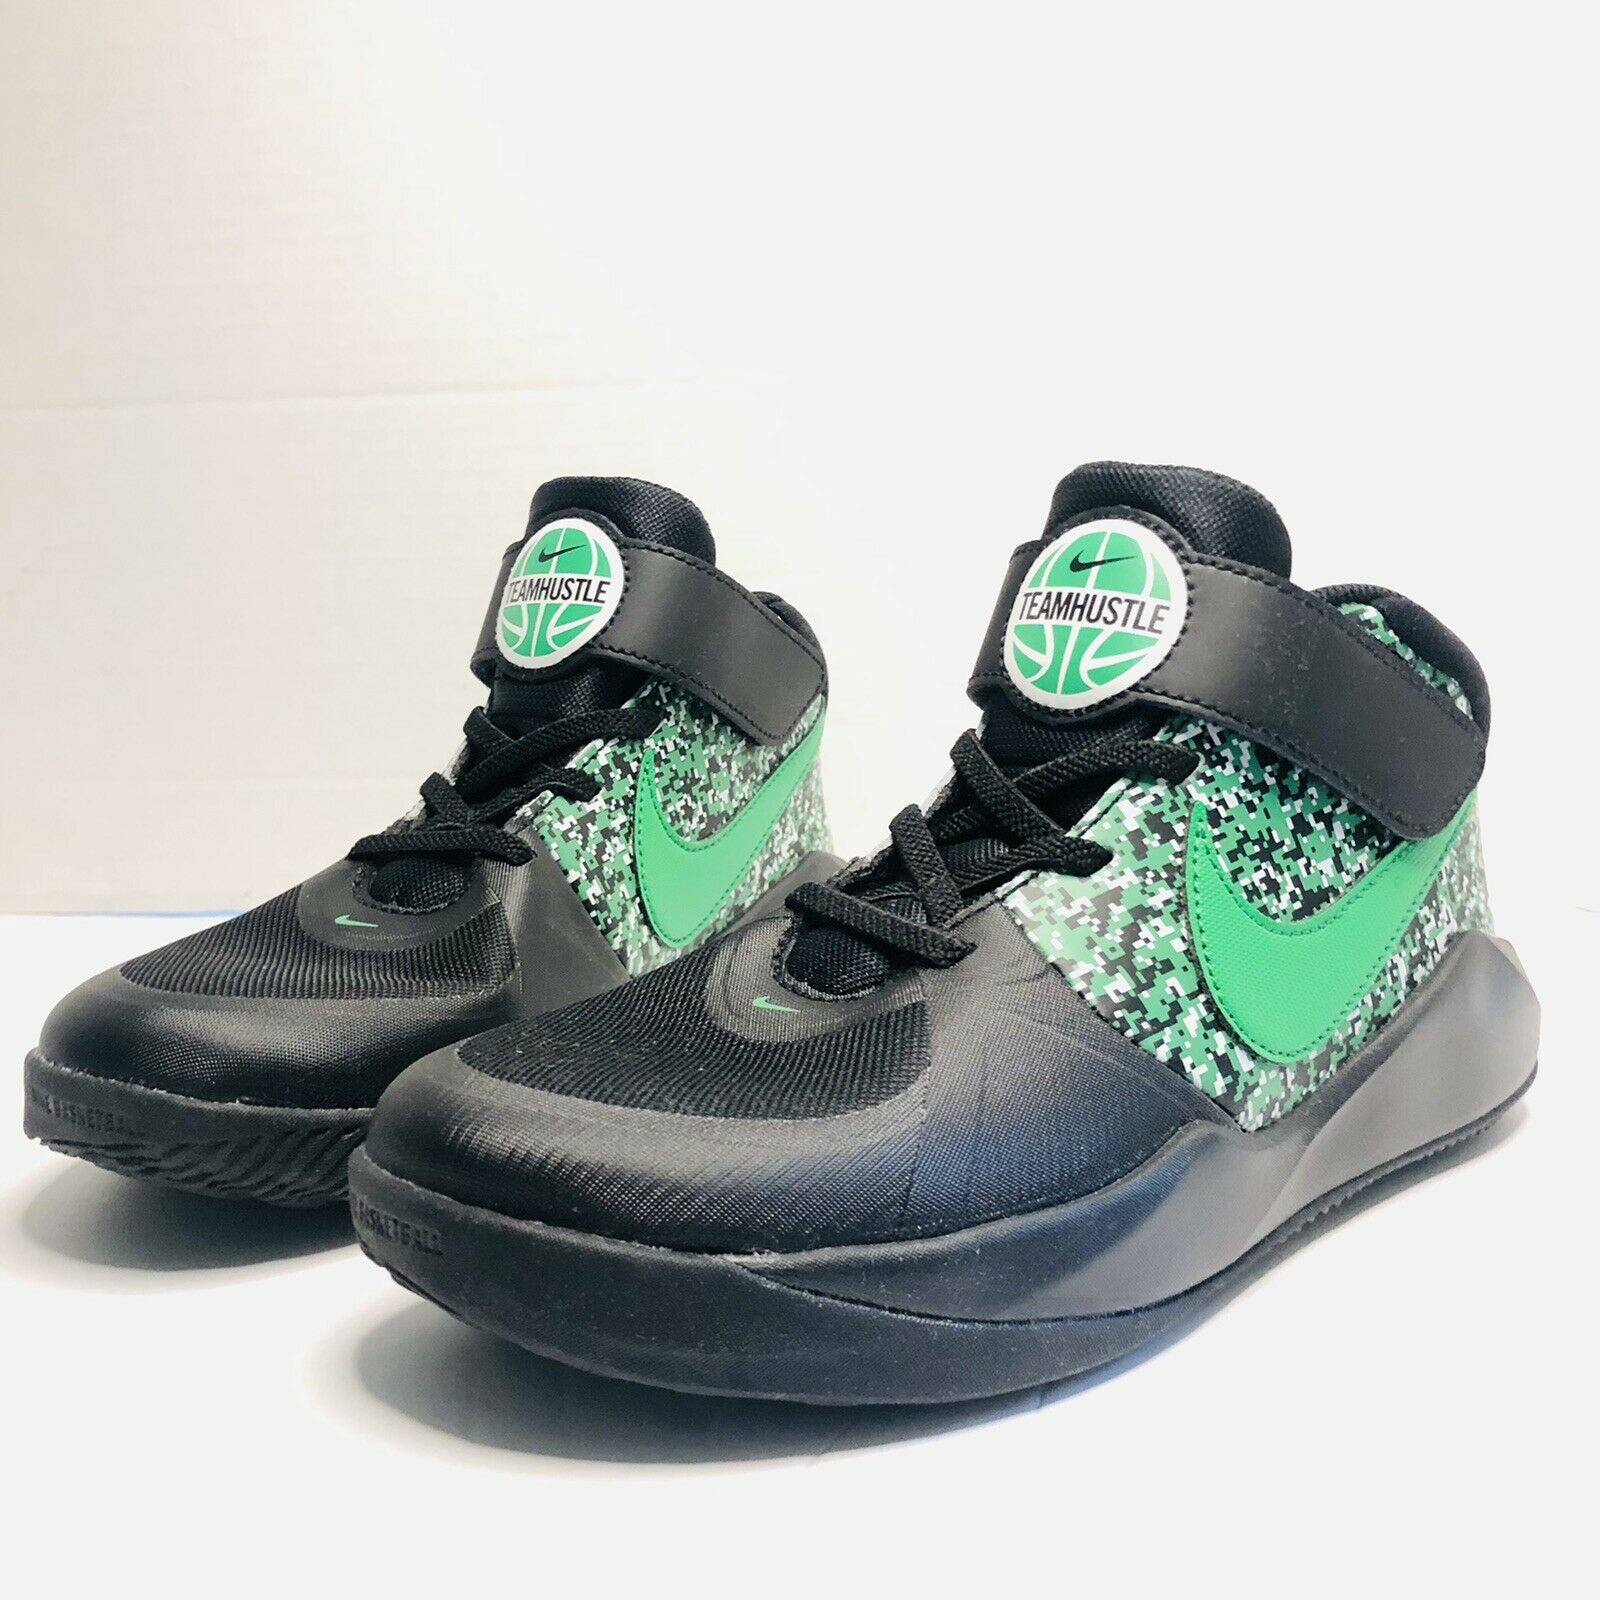 Nike Kids' Preschool Hustle D 9 Basketball Shoes DC1994 001 Size 2 Youth new